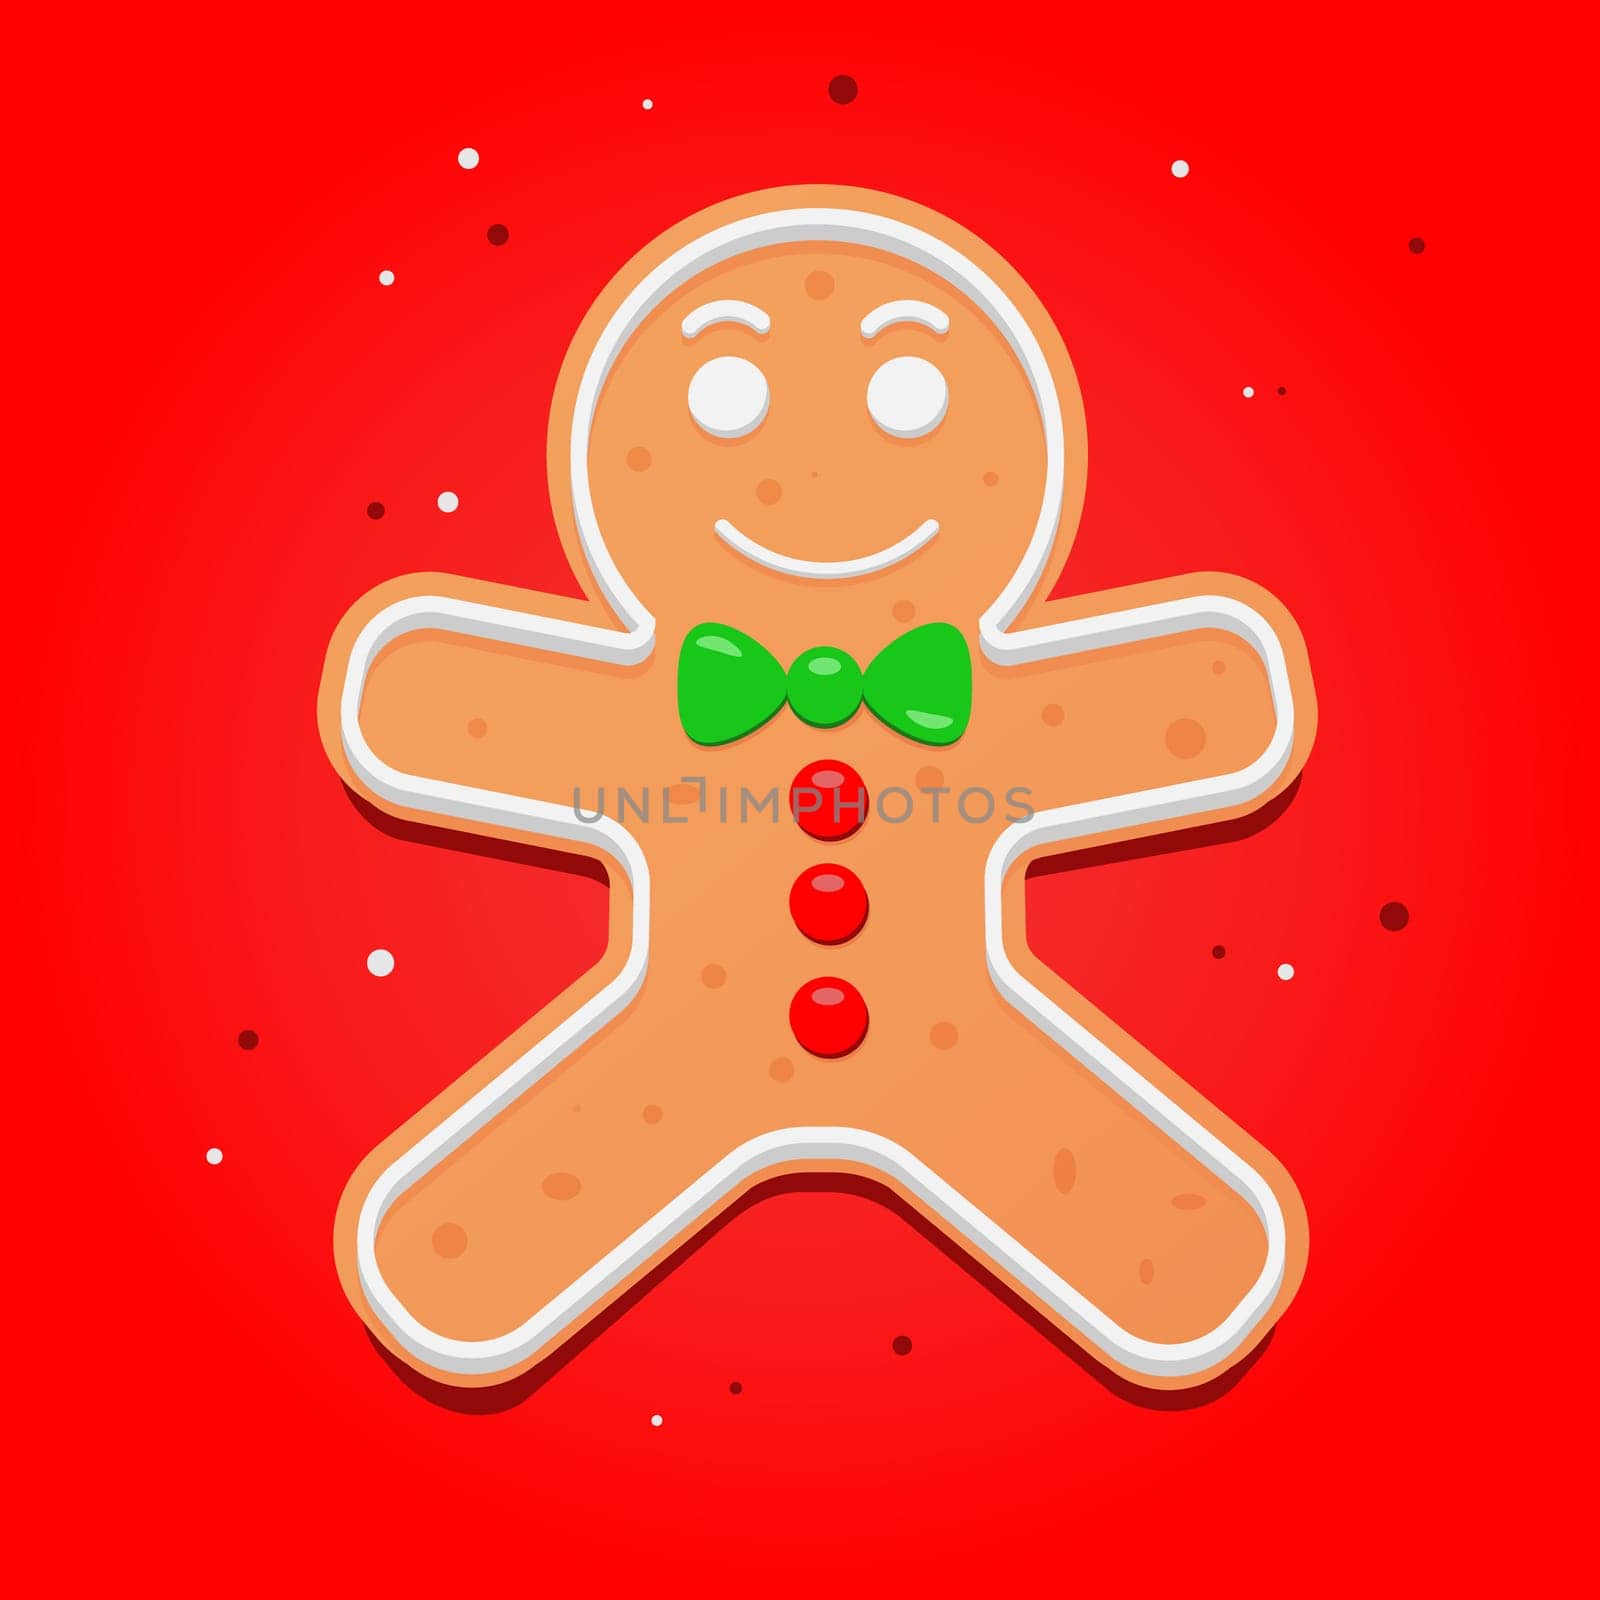 the gingerbread man by Veranikas